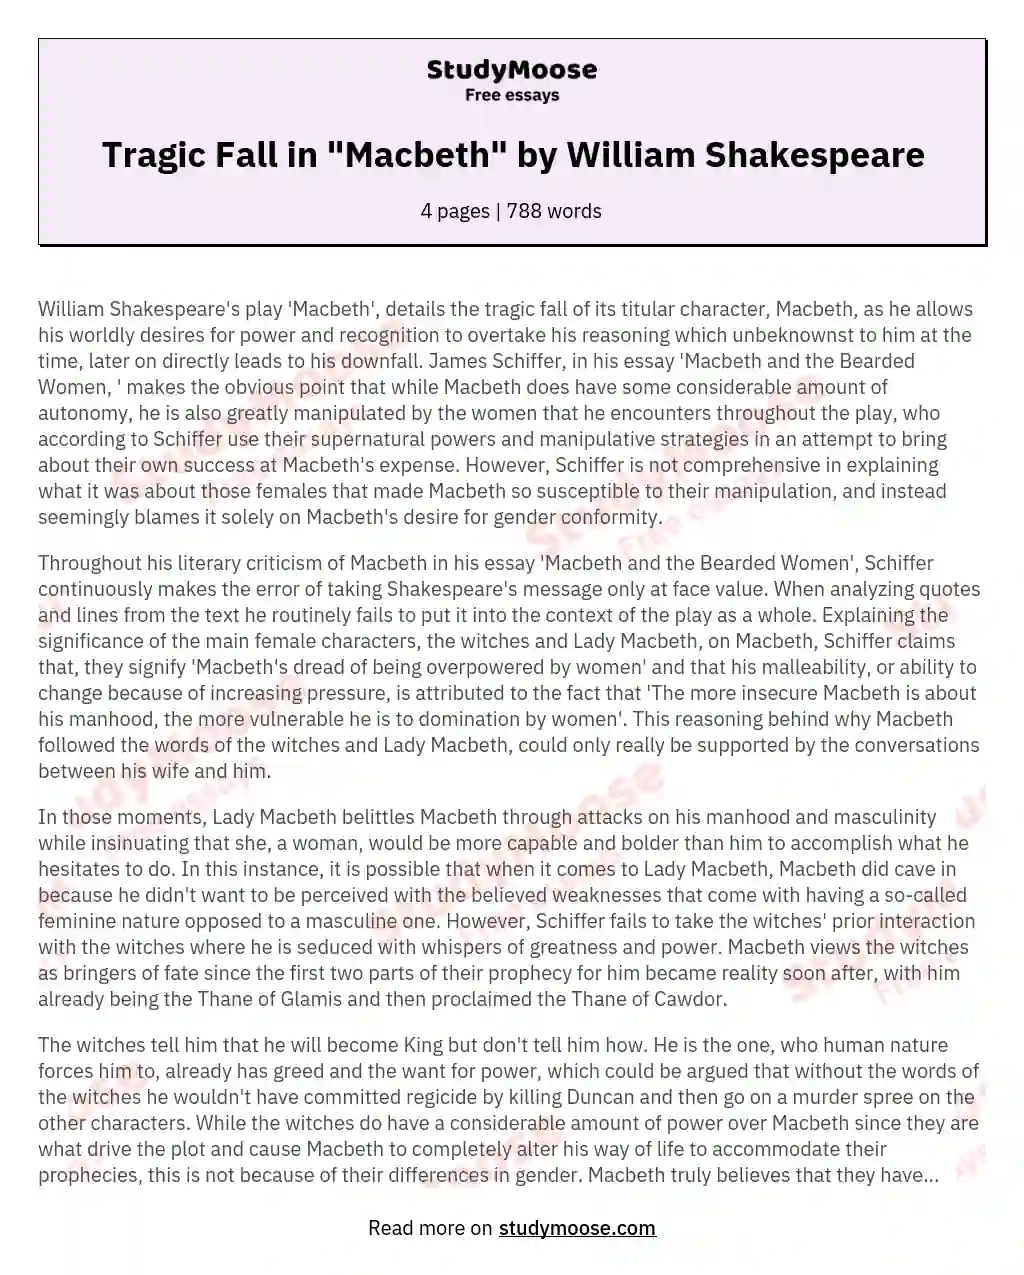 Tragic Fall in "Macbeth" by William Shakespeare essay